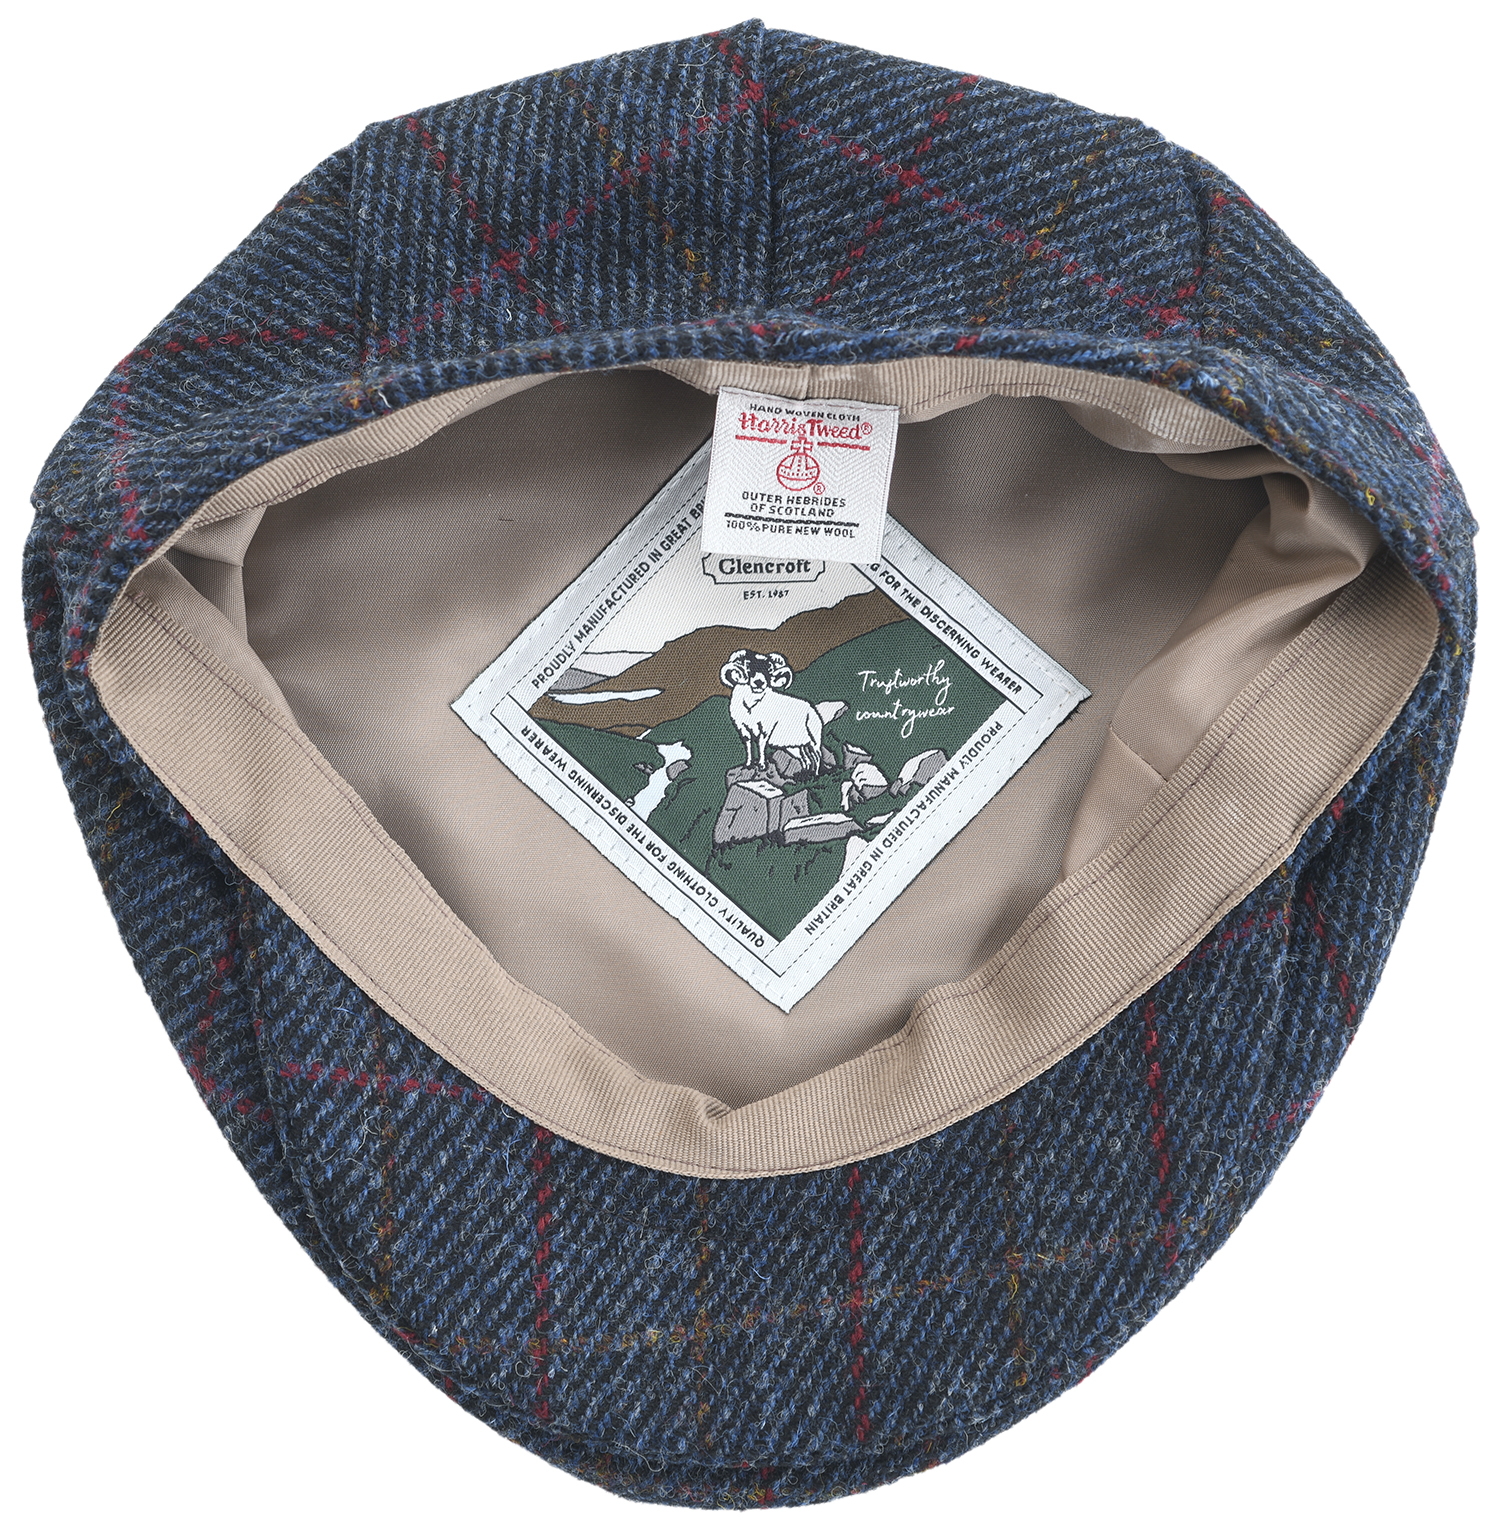 Mens Harris Tweed Cap Peaked Hat Made in the UK Warm Newsboy Style | eBay